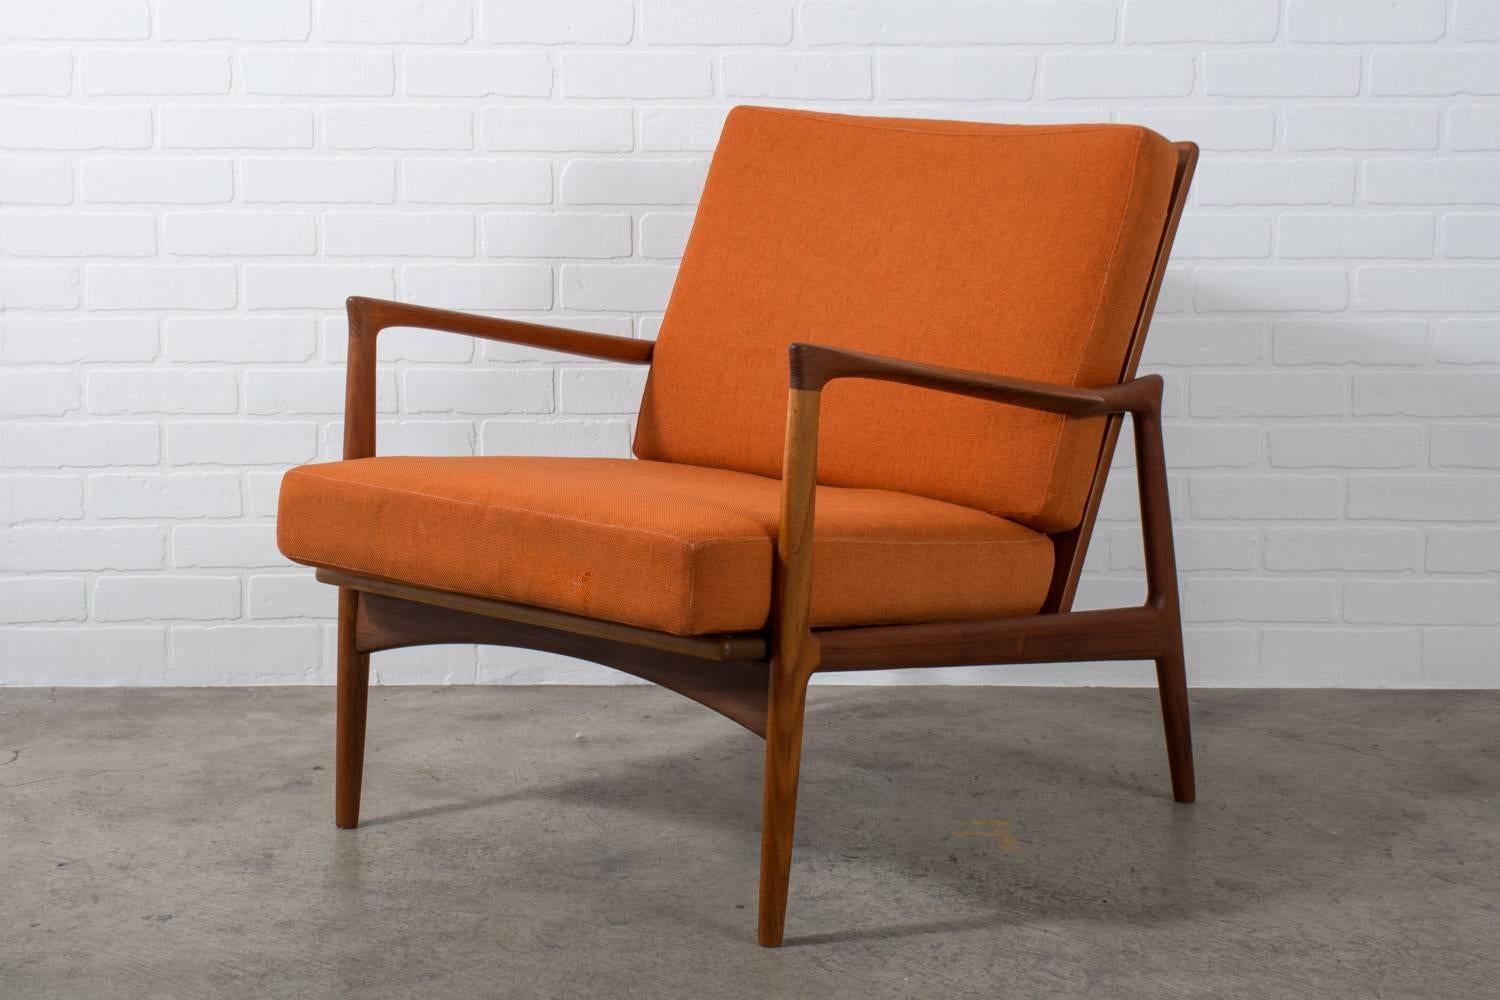 20th Century Mid-Century Modern Teak Lounge Chair by Ib Kofod Larsen, Denmark, 1960s For Sale